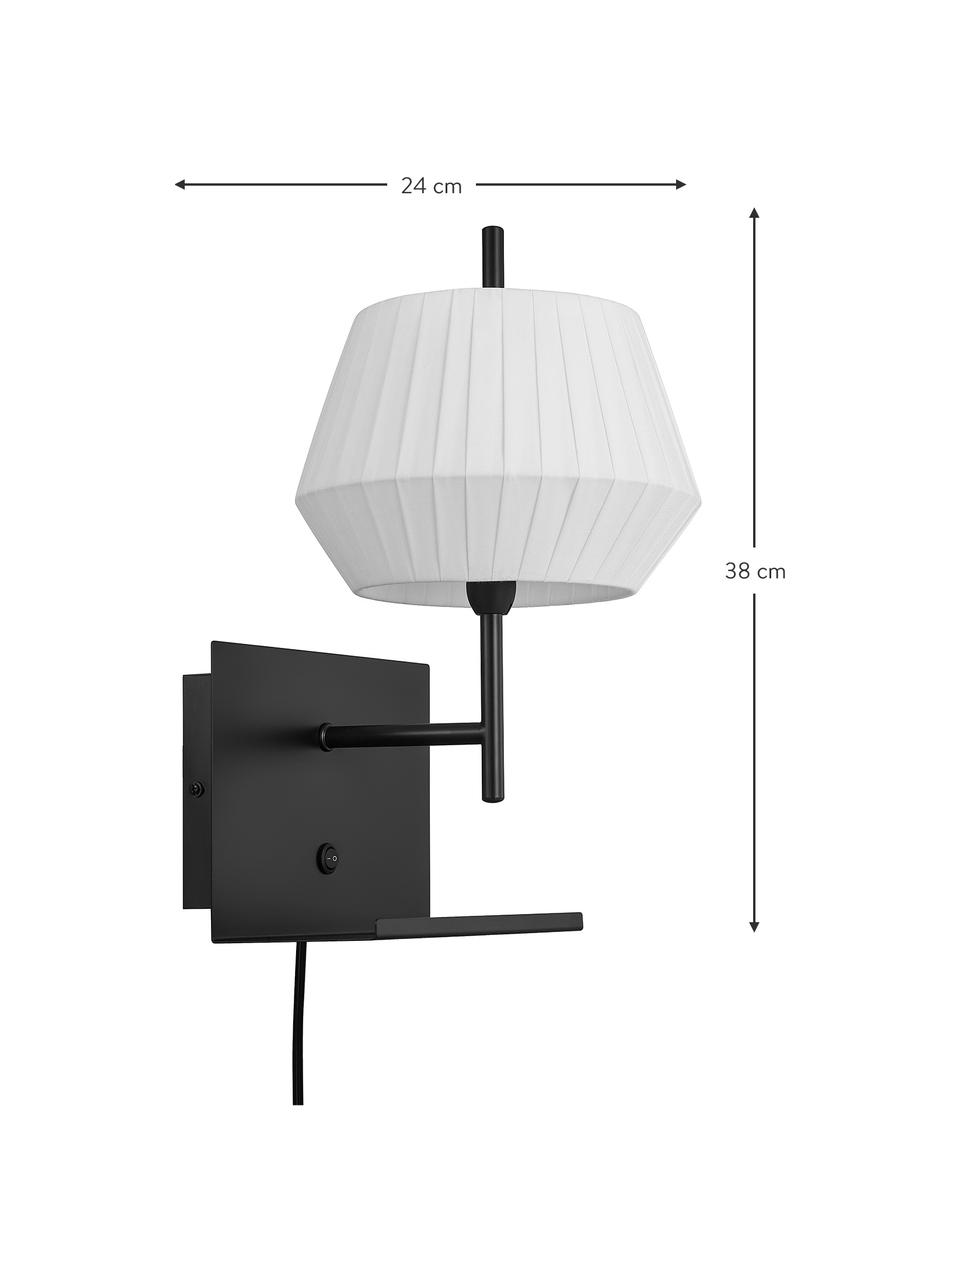 Klassieke wandlamp Dicte met stekker, Lampenkap: stof, Wit, zwart, 21 x 38 cm